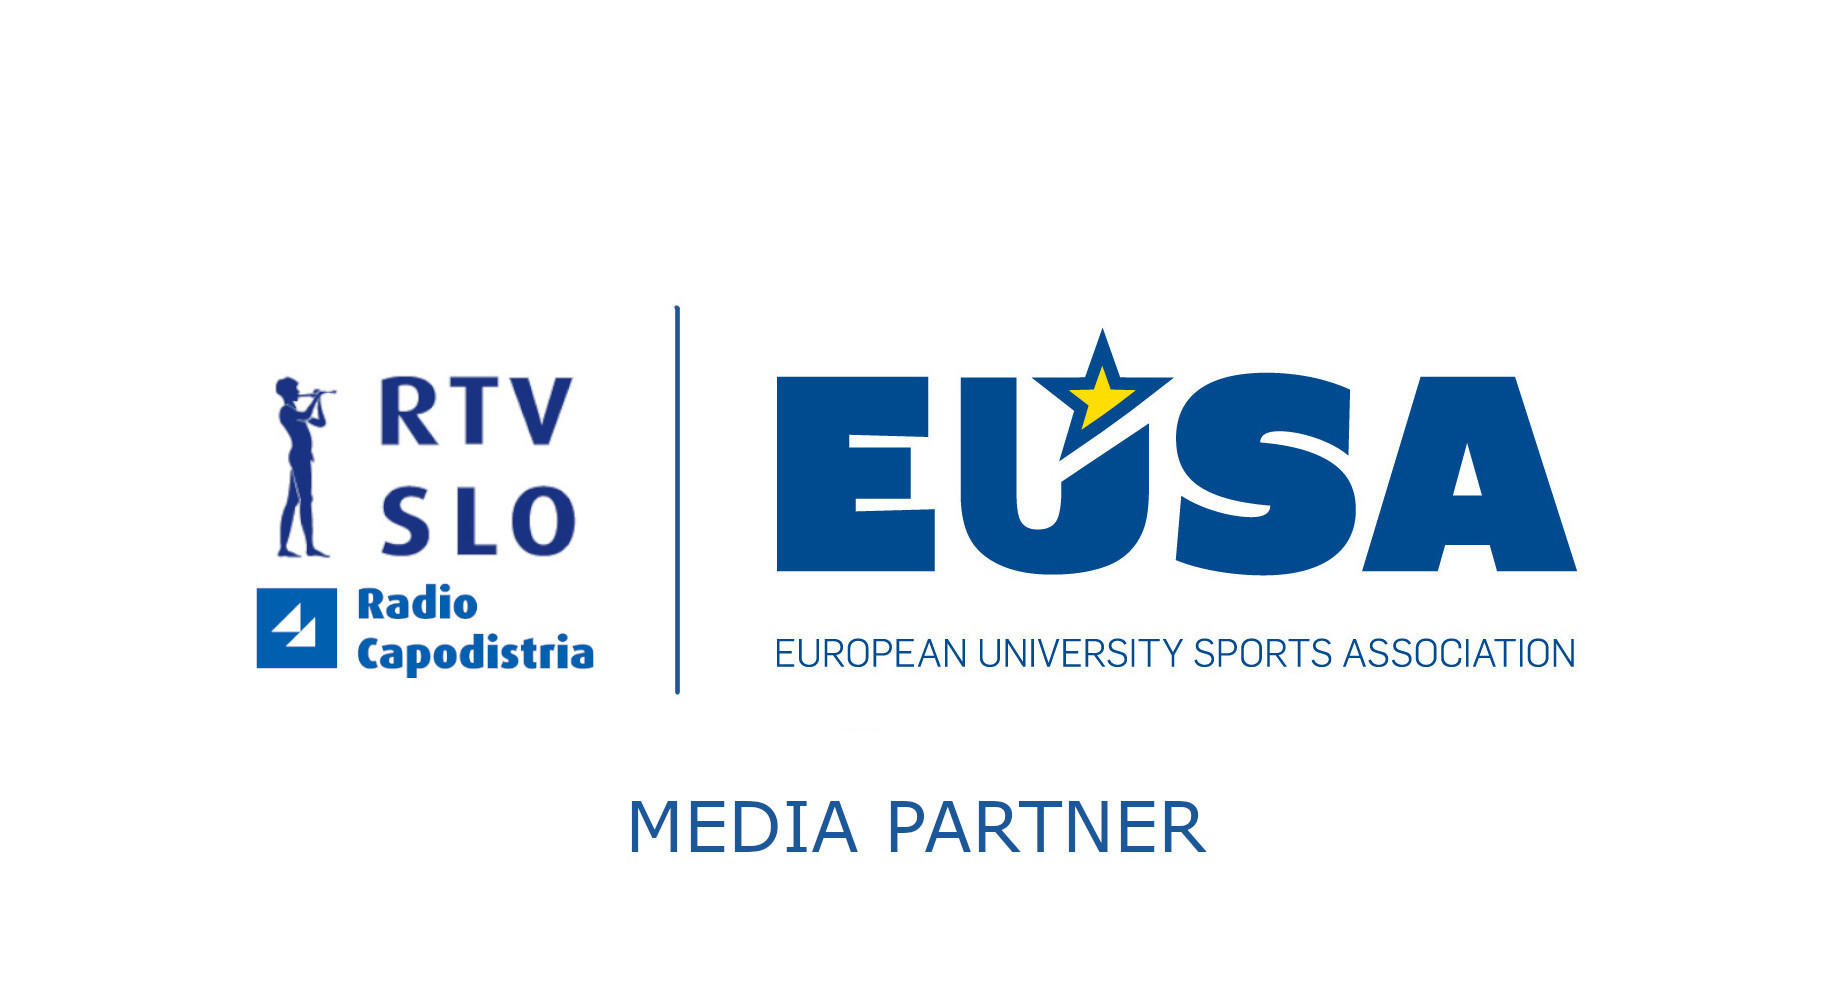 EUSA sign Memorandum of Understanding with Slovenian radio station